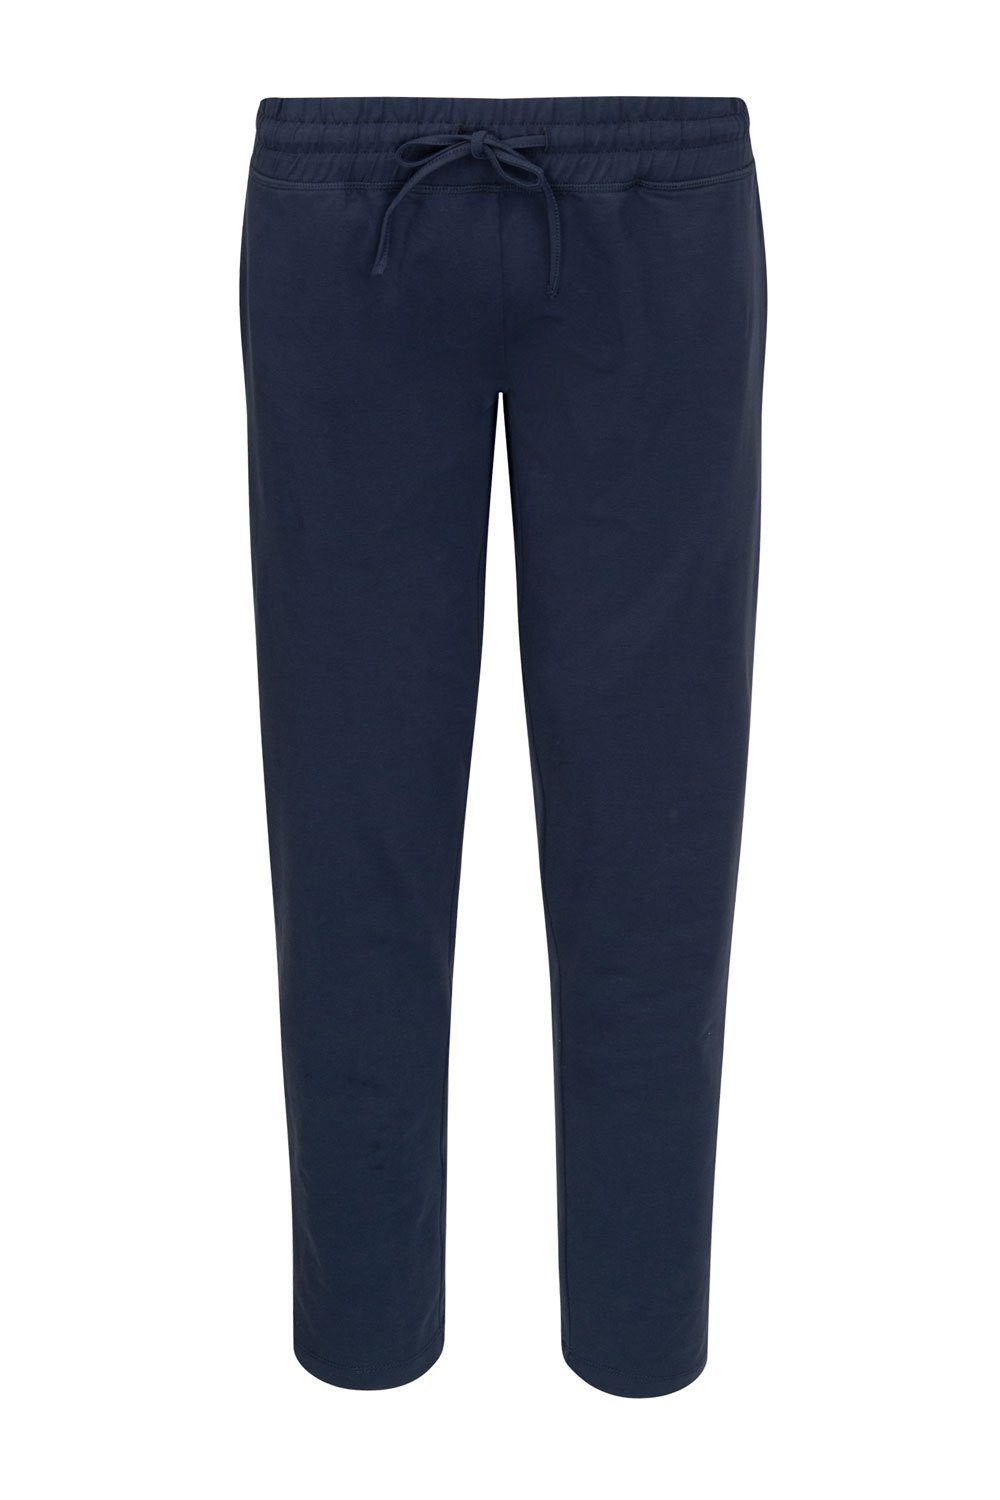 seidensticker Loungehose Basic Pants Flex 500068 navy | Hosen